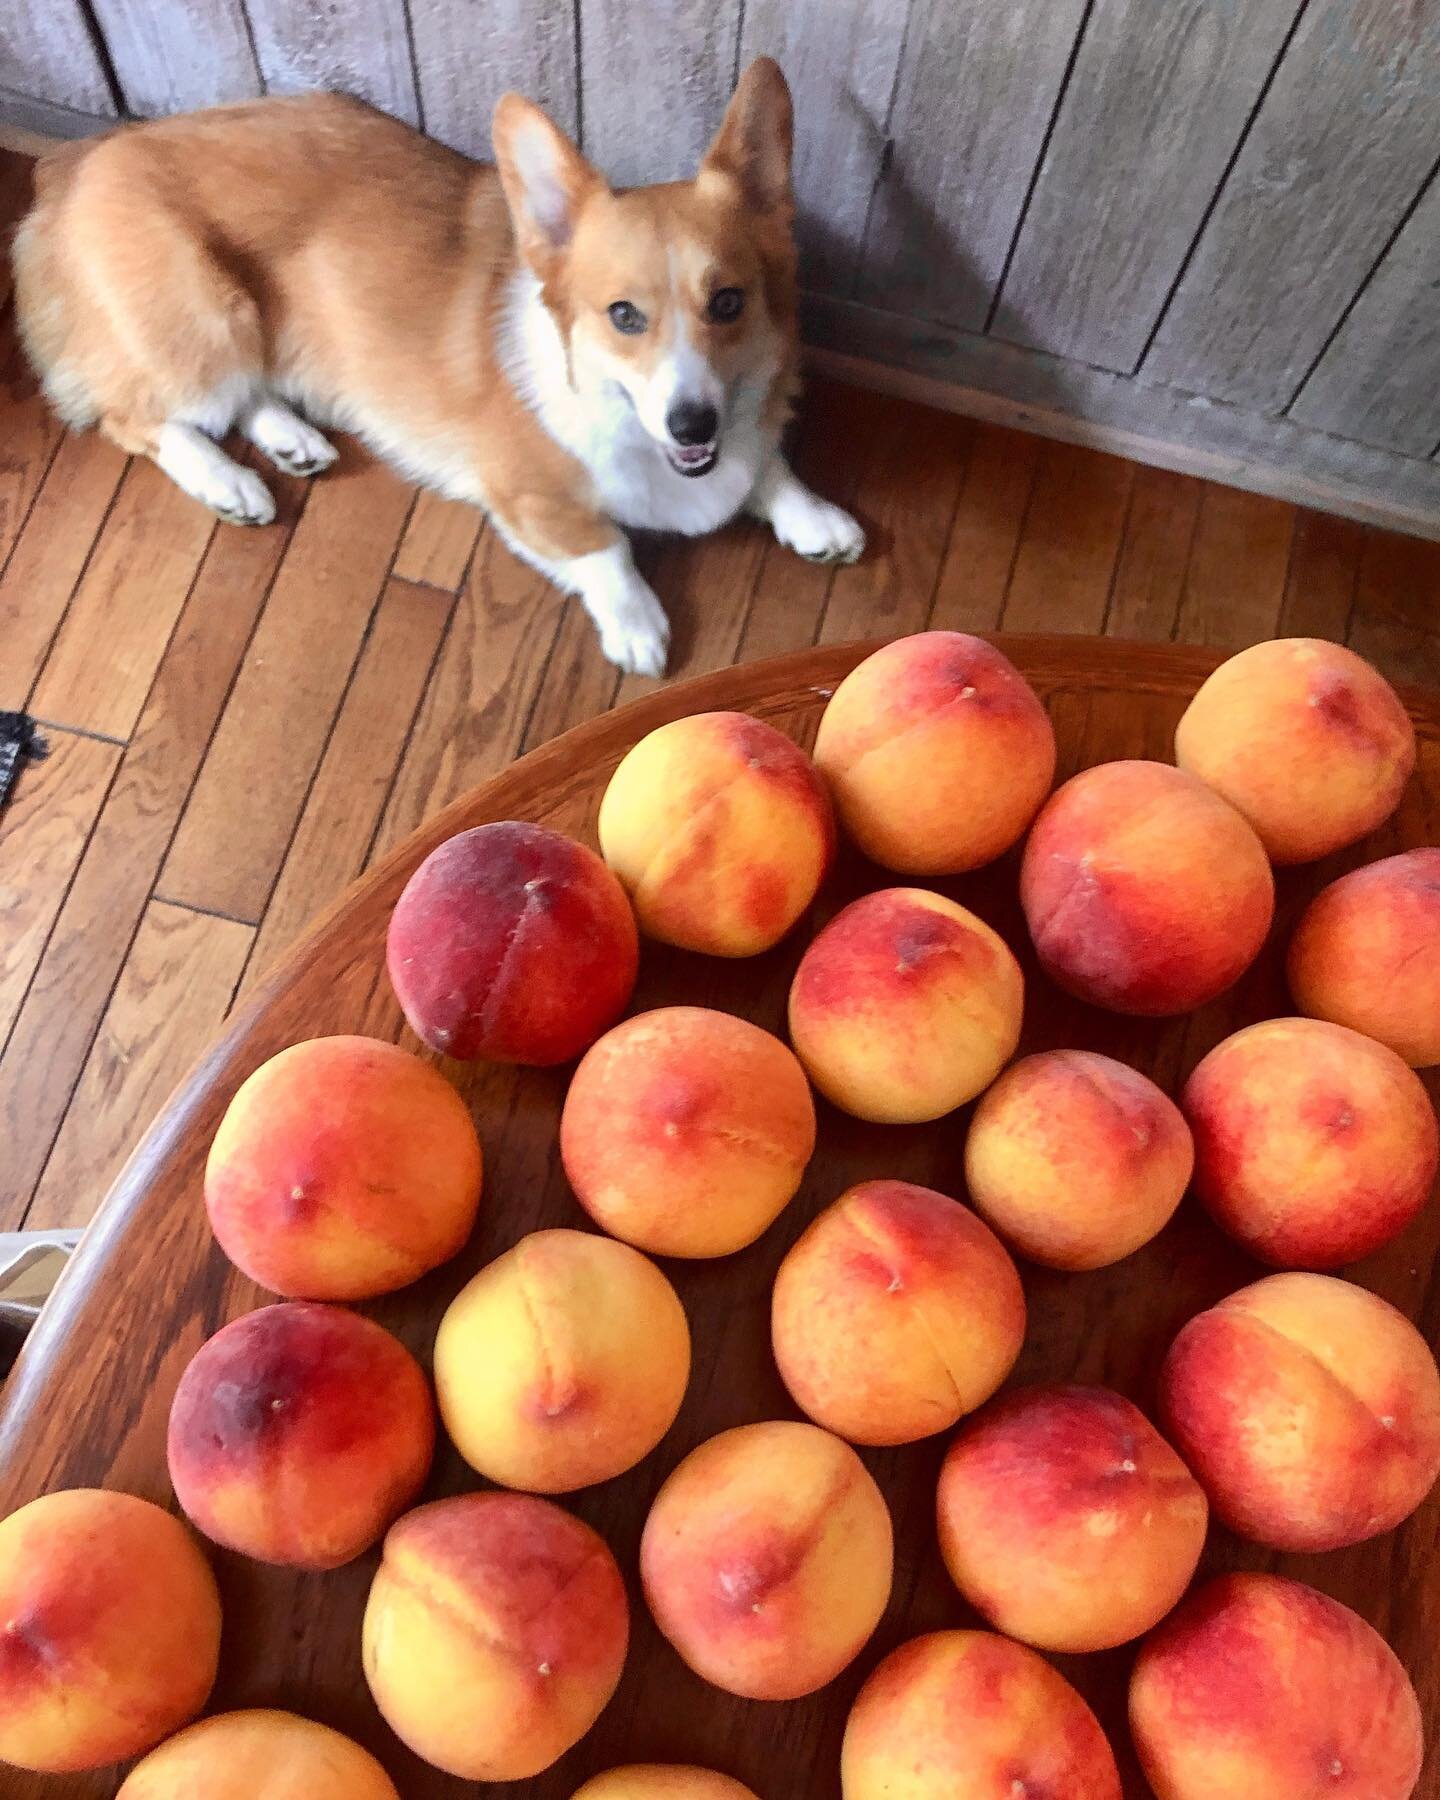 Lots of 🍑 within reach&hellip;

#summertime #peach #corgisofinstagram #corgi #corgibutt #dogdaysofsummer #peachseason #dogsofinstagram